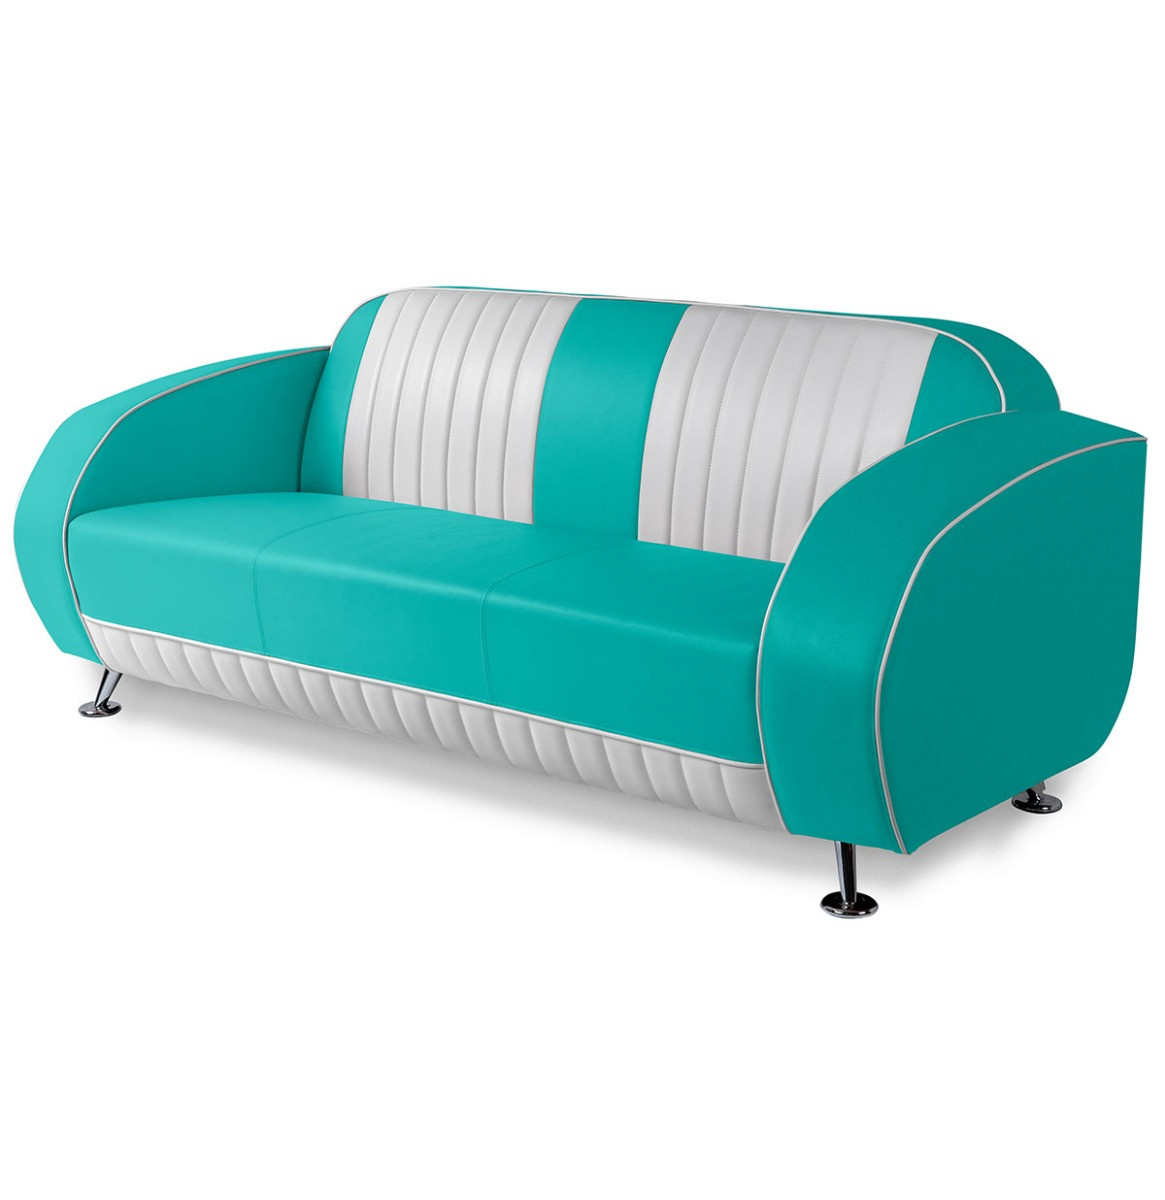 Bel Air Retro Waverly Tweezitter Sofa SF02CBG63 Turquoise/Wit